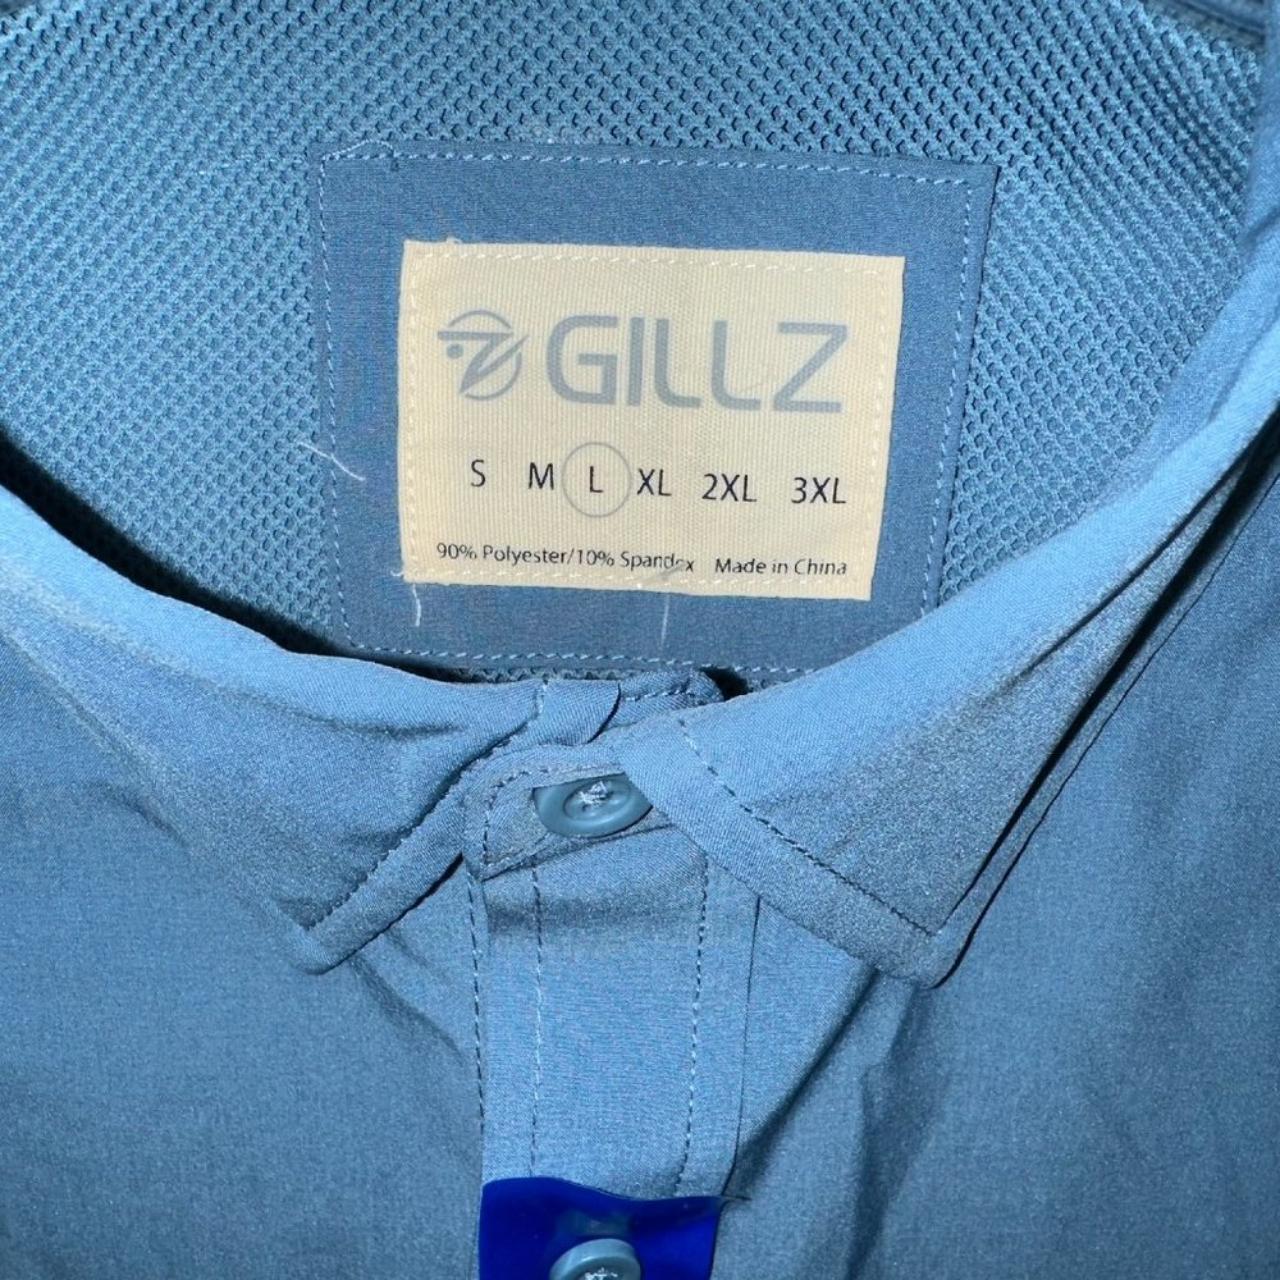 Gillz Men's Long Sleeve Performance Fishing Shirt - Depop